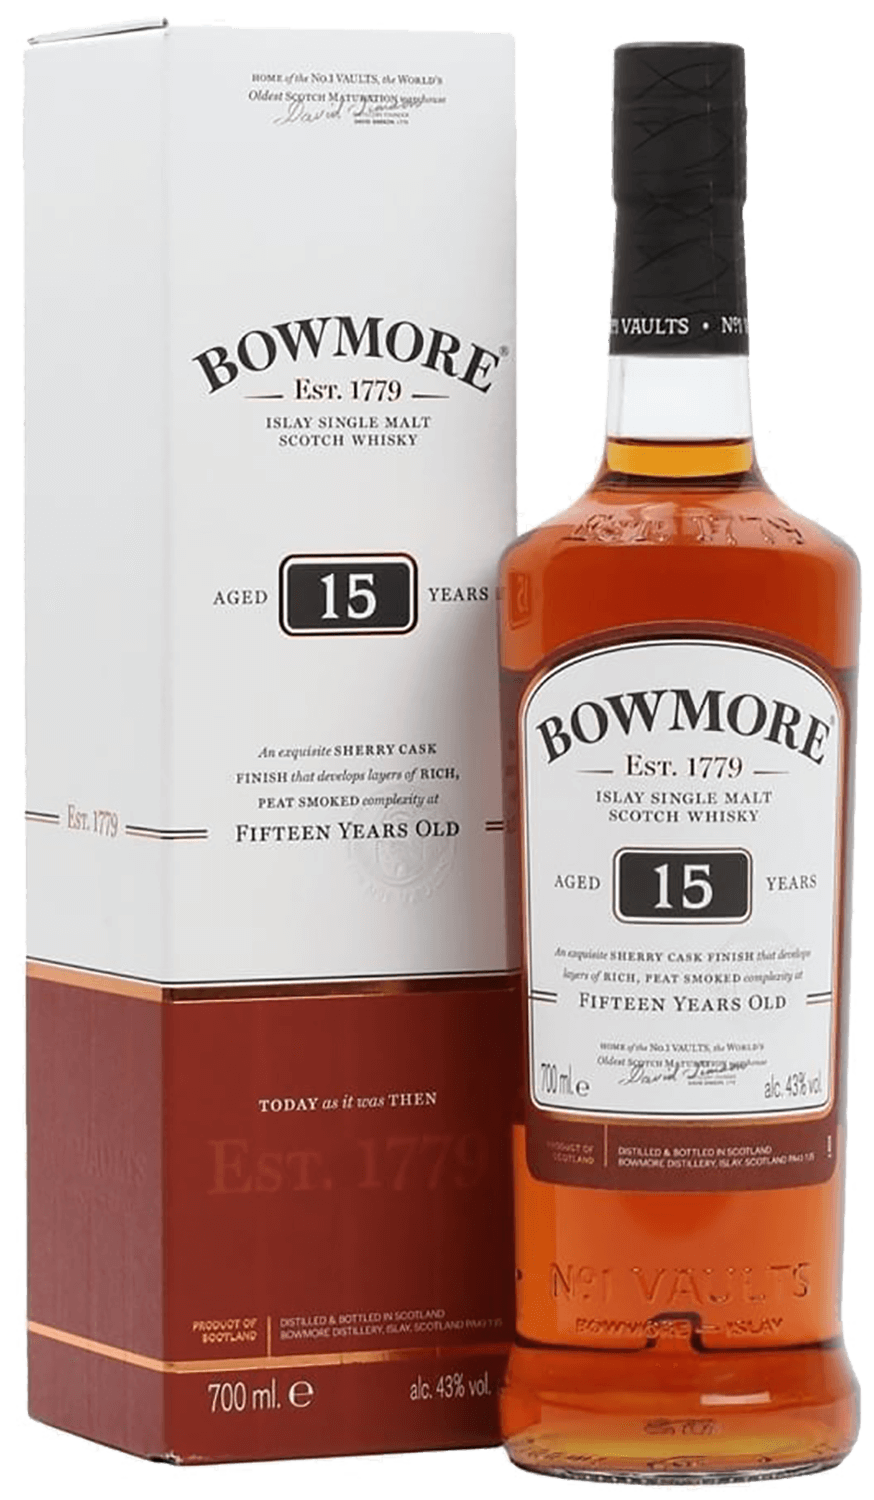 Bowmore 15 y.o. Islay single malt scotch whisky (gift box) bunnahabhain stiuireadair islay single malt scotch whisky gift box